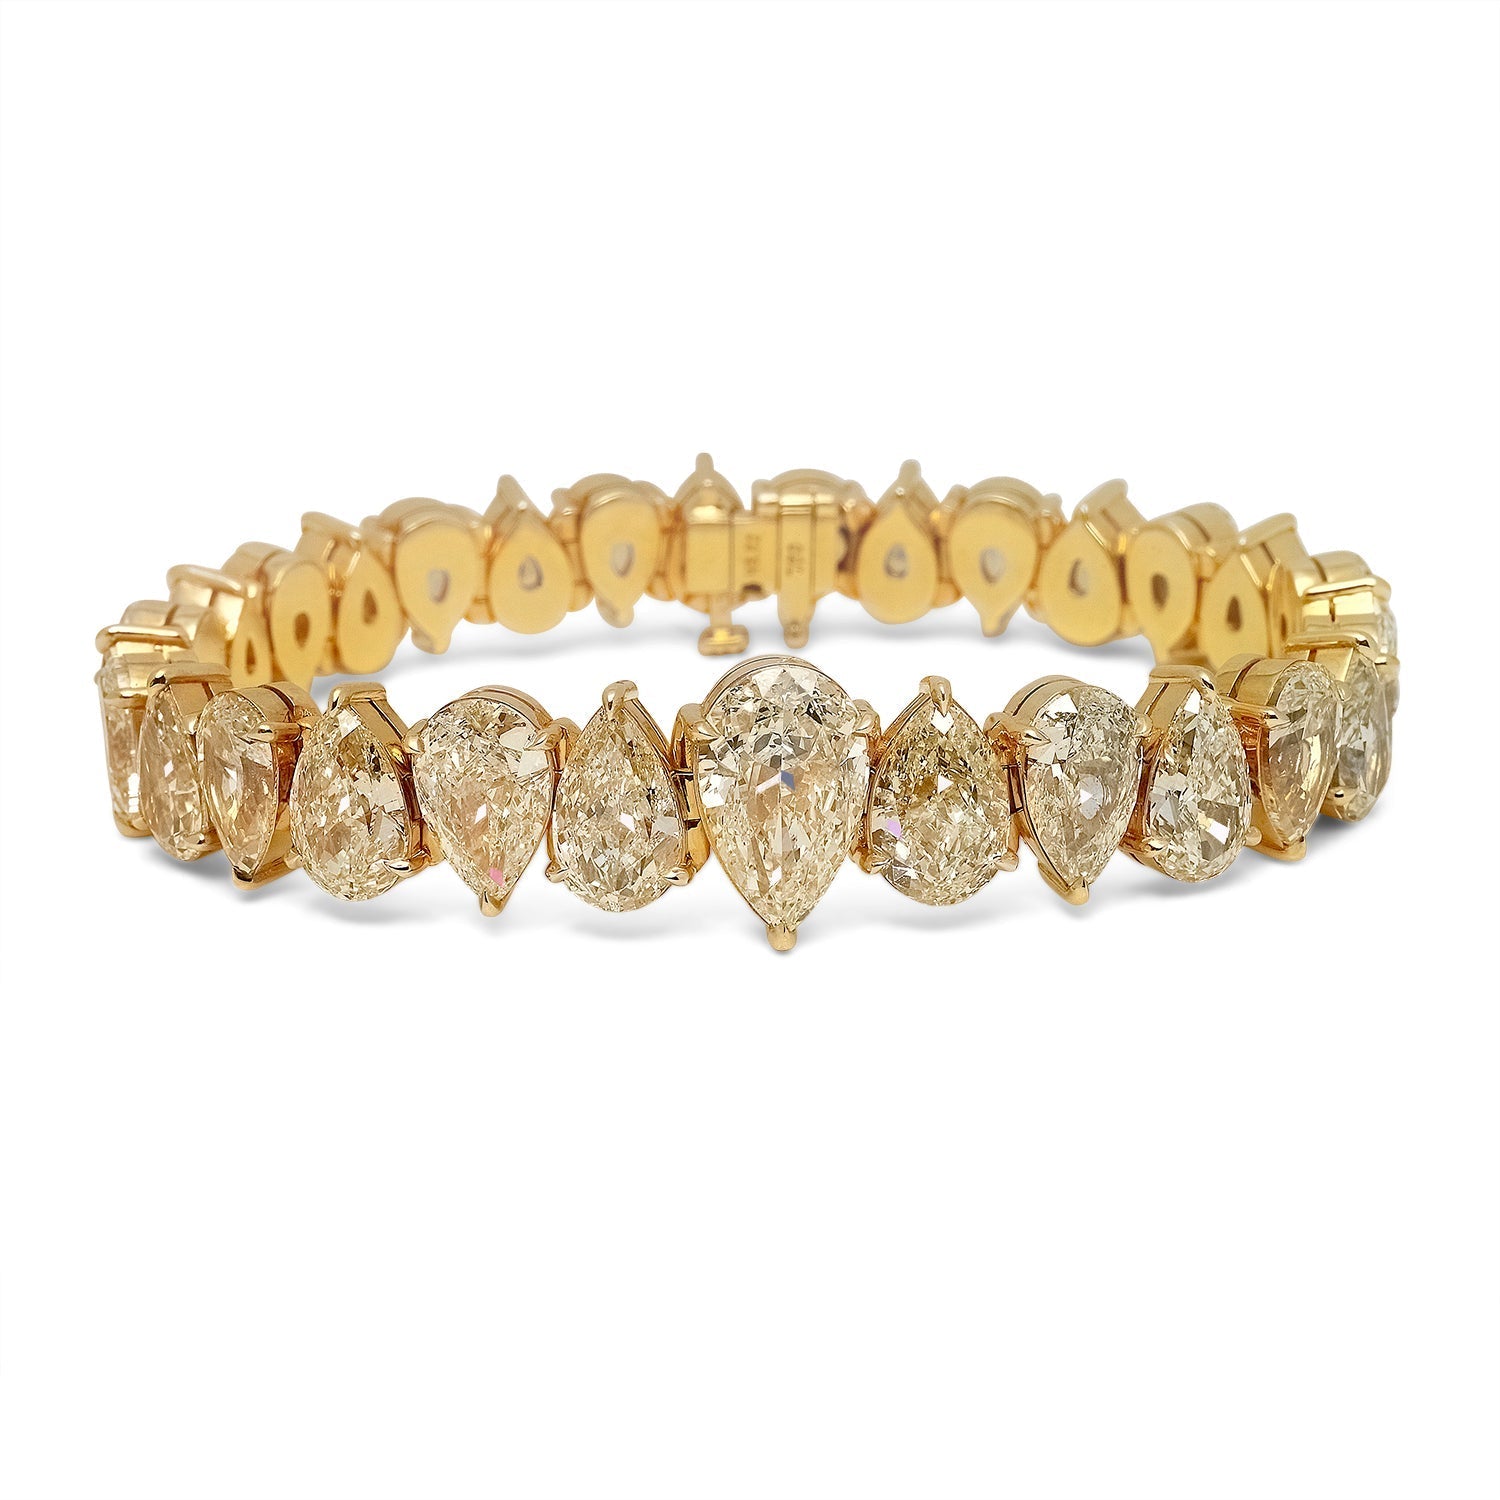 Yellow Diamond Bracelet Pear Shape Cut 44 Carat Inline Diamond Bracelet in 18K Yellow Gold Front View